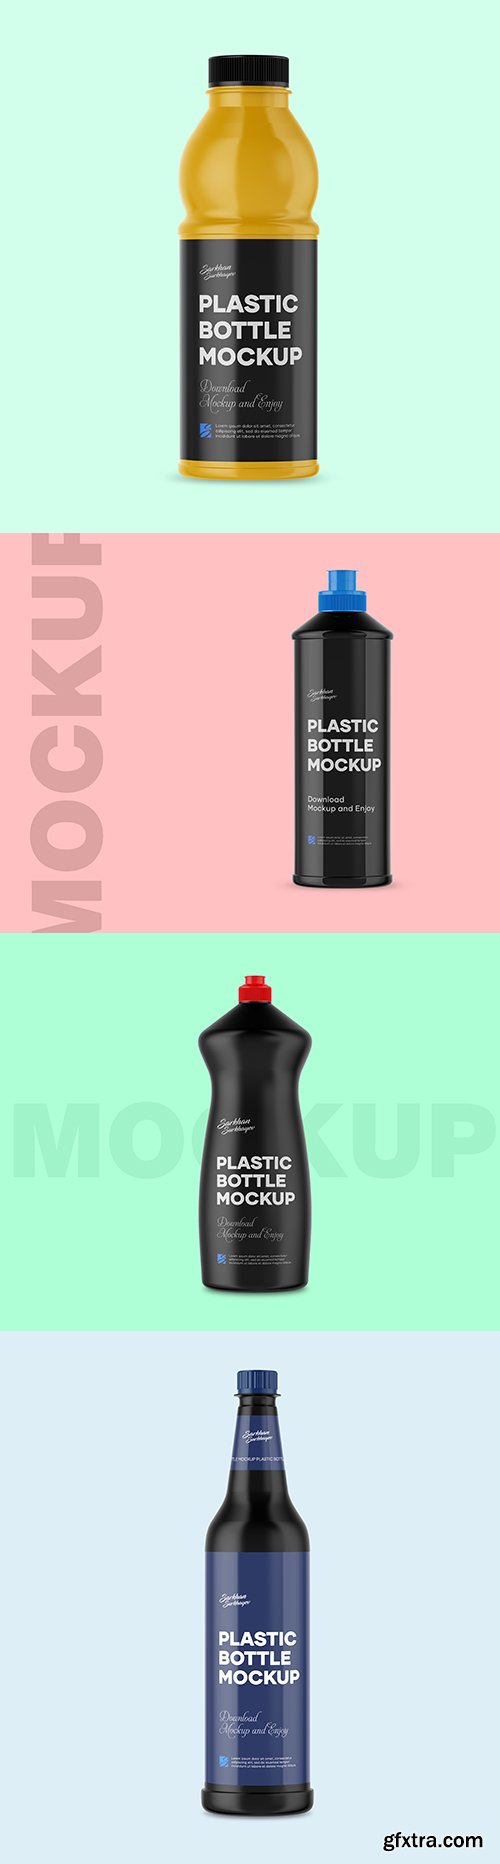 Plastic bottle Mockup